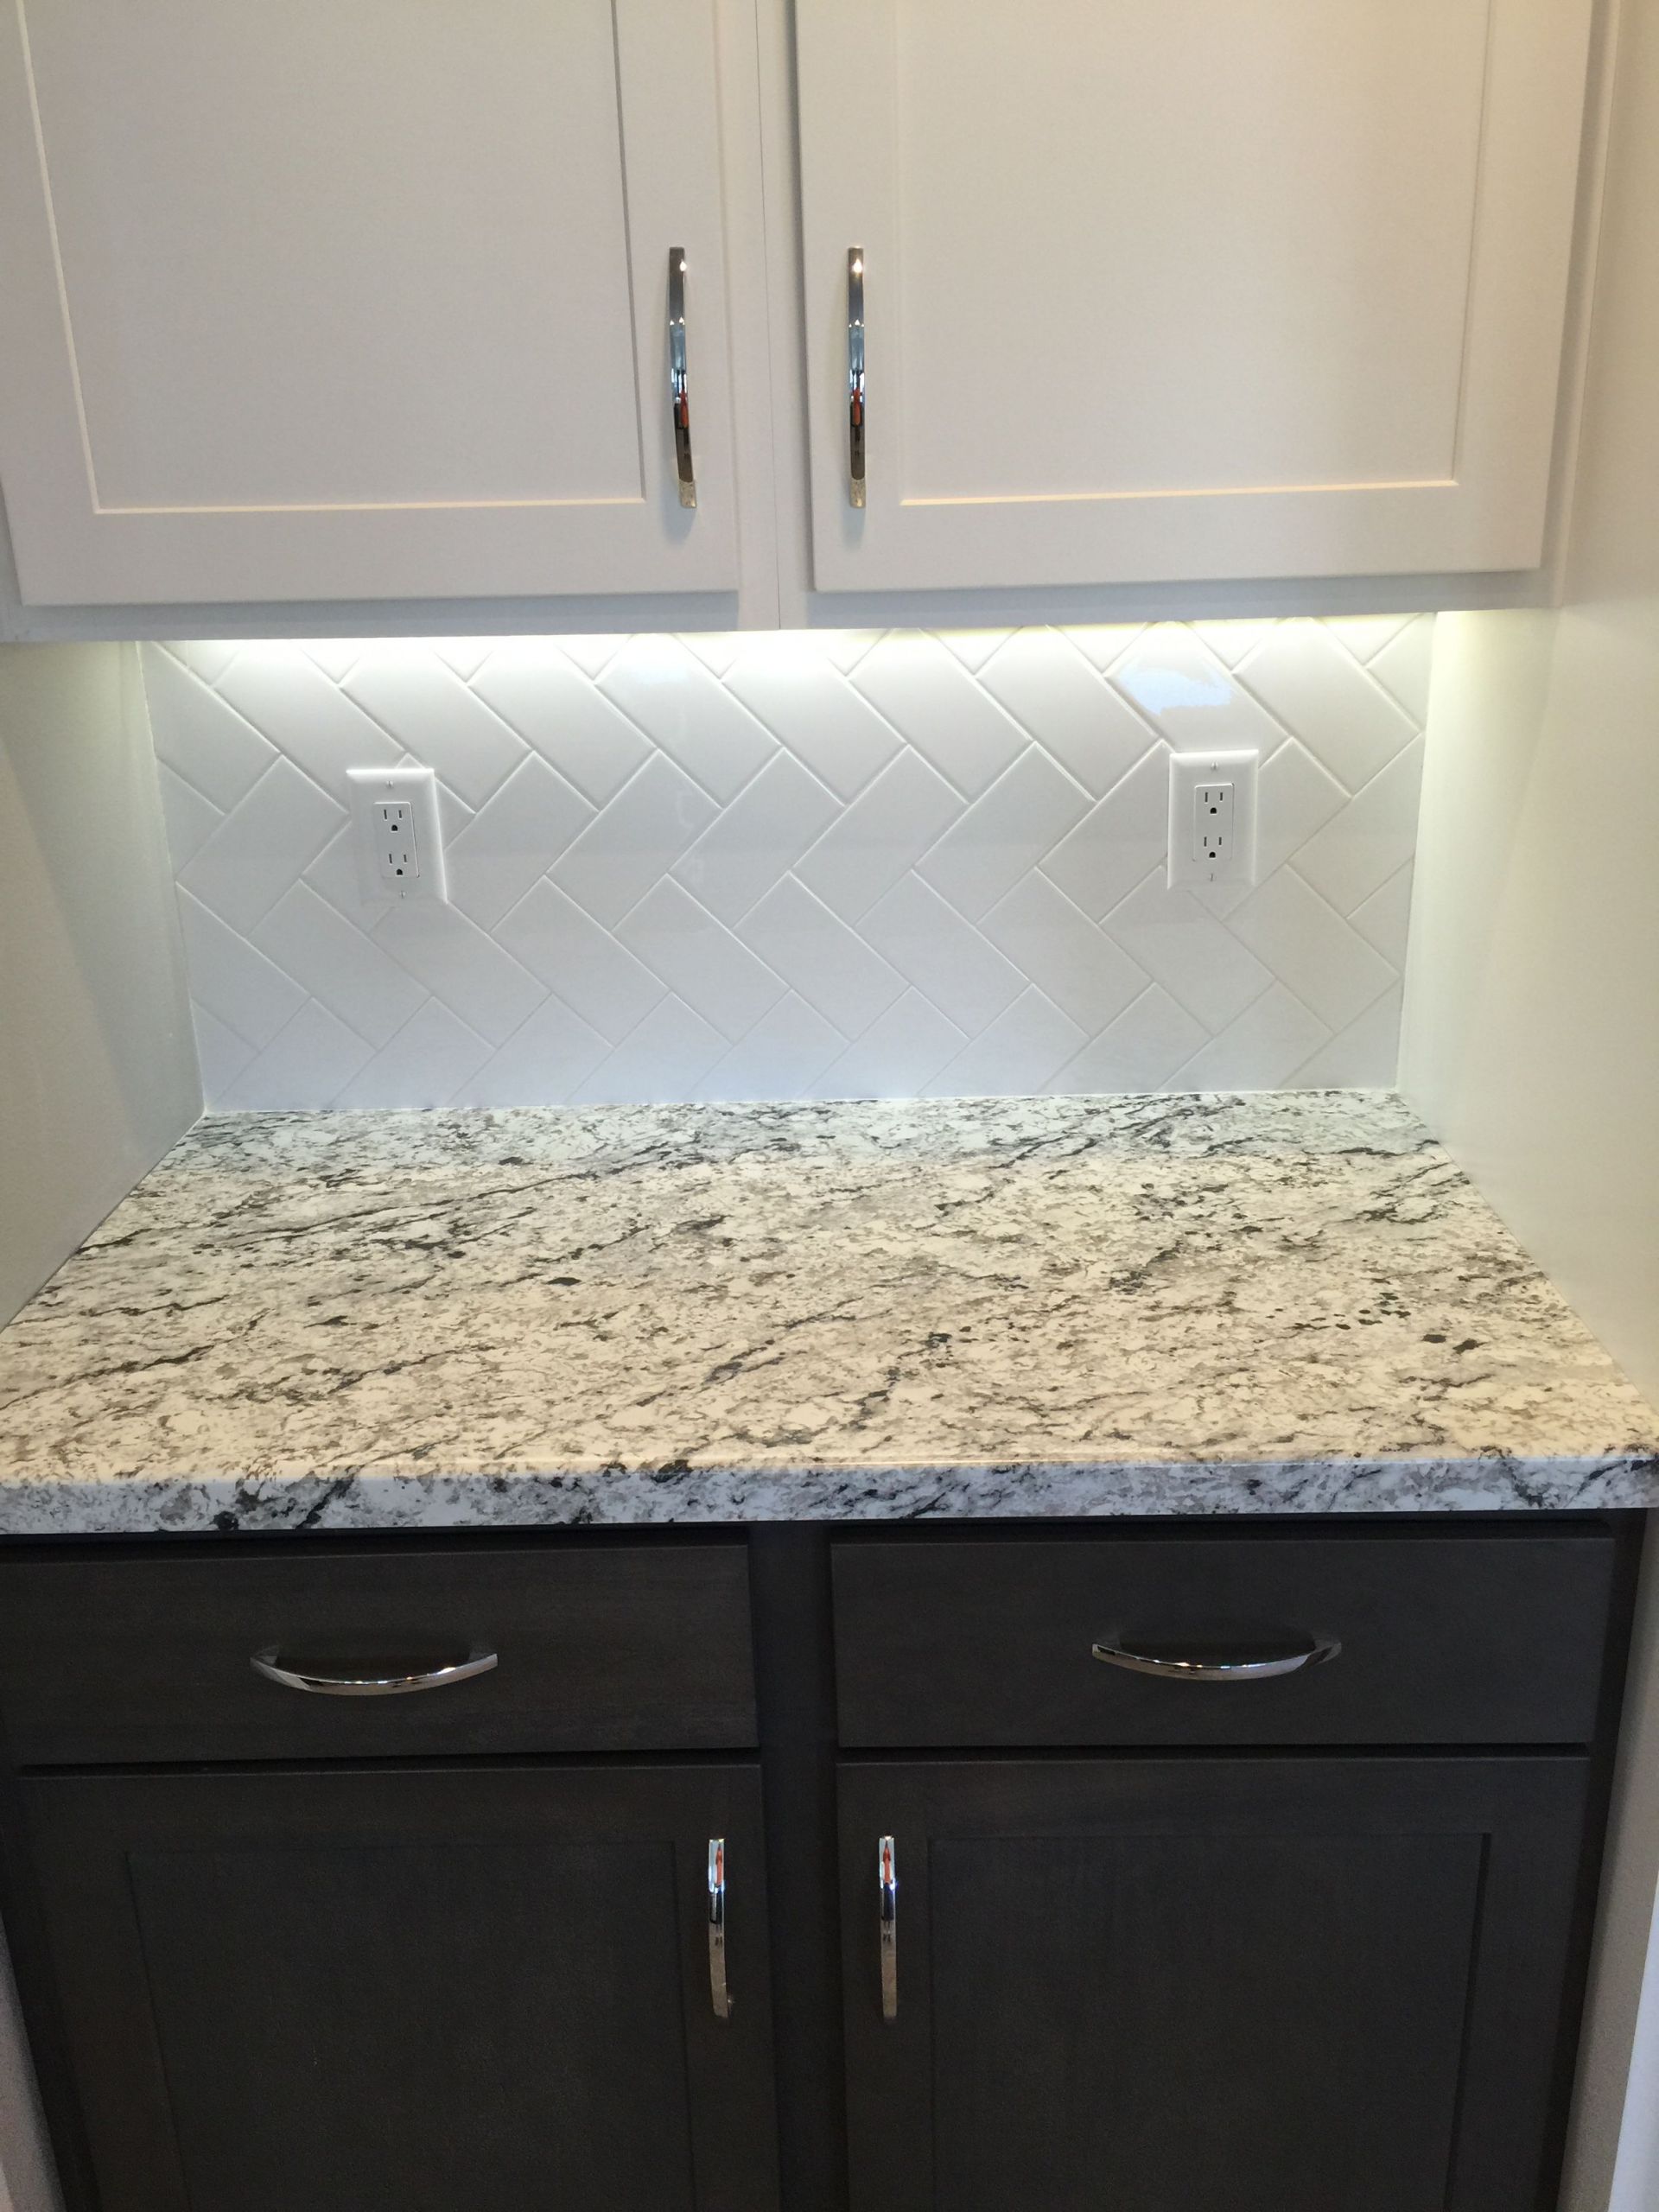 Backsplash Herringbone Subway Tile New Kitchen Backsplash In A White 3×6 Subway Tile In A Vertical